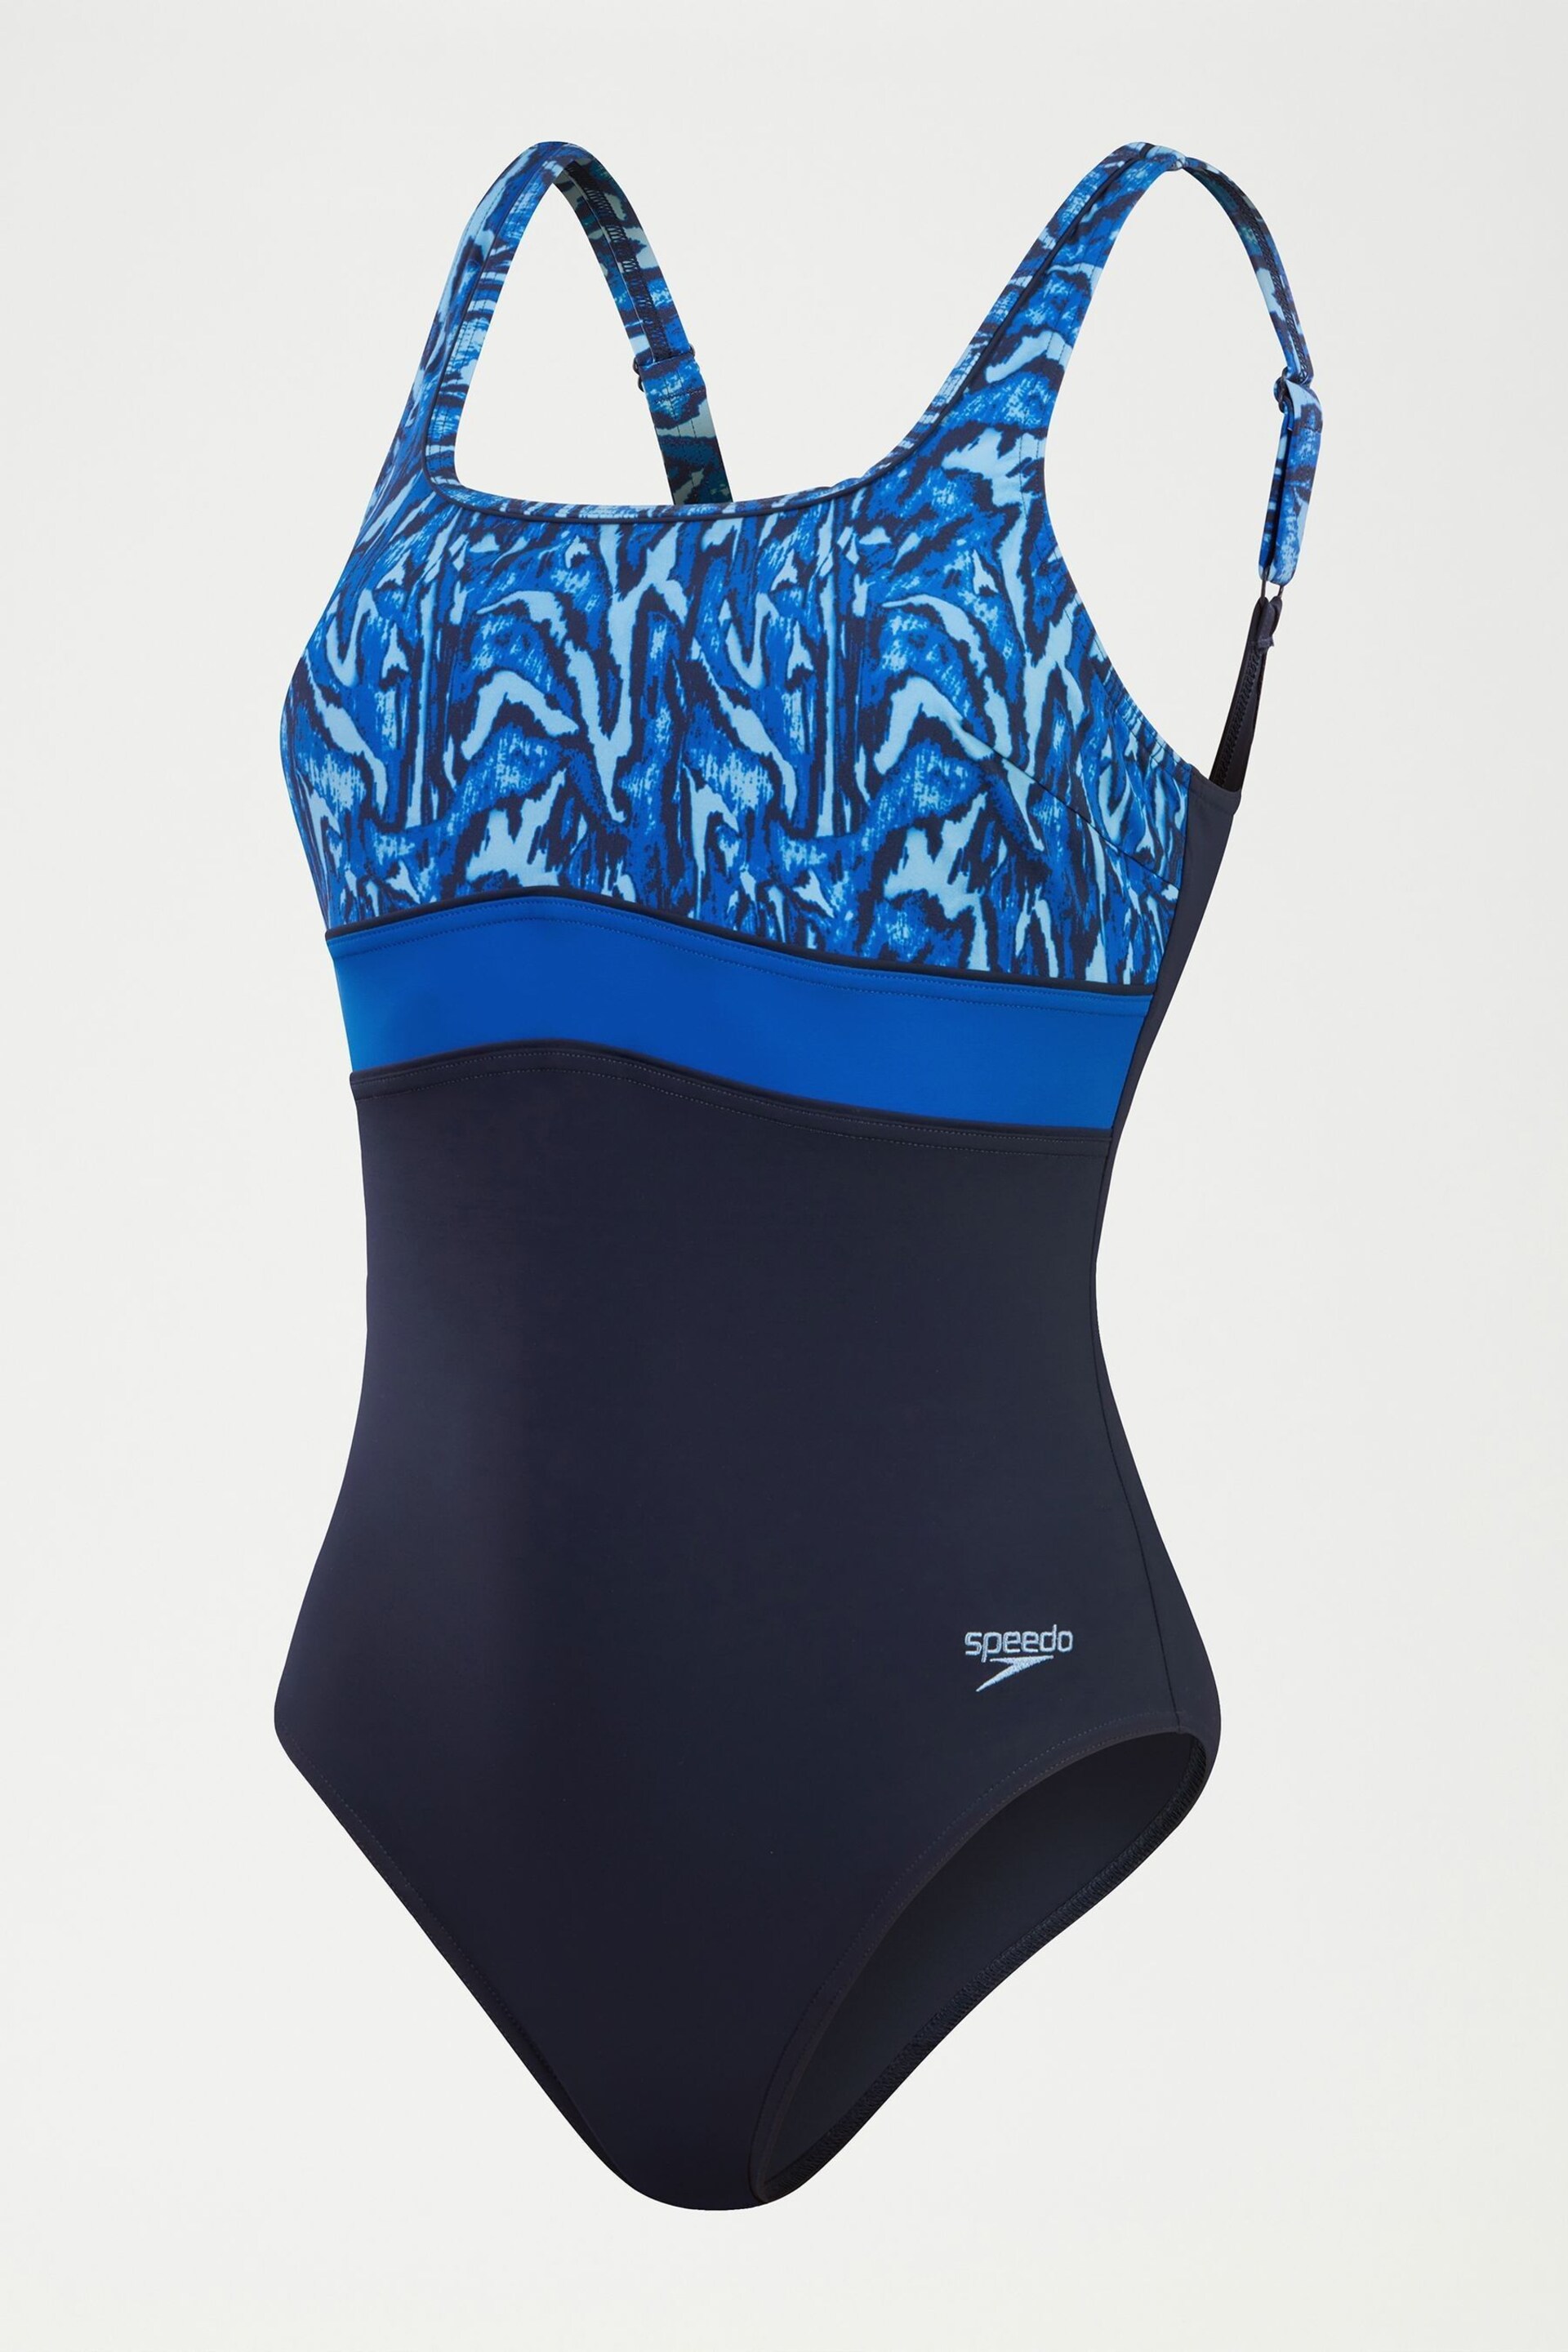 Speedo Womens Blue Shaping ContourEclipse 1 Piece Swimsuit - Image 6 of 6